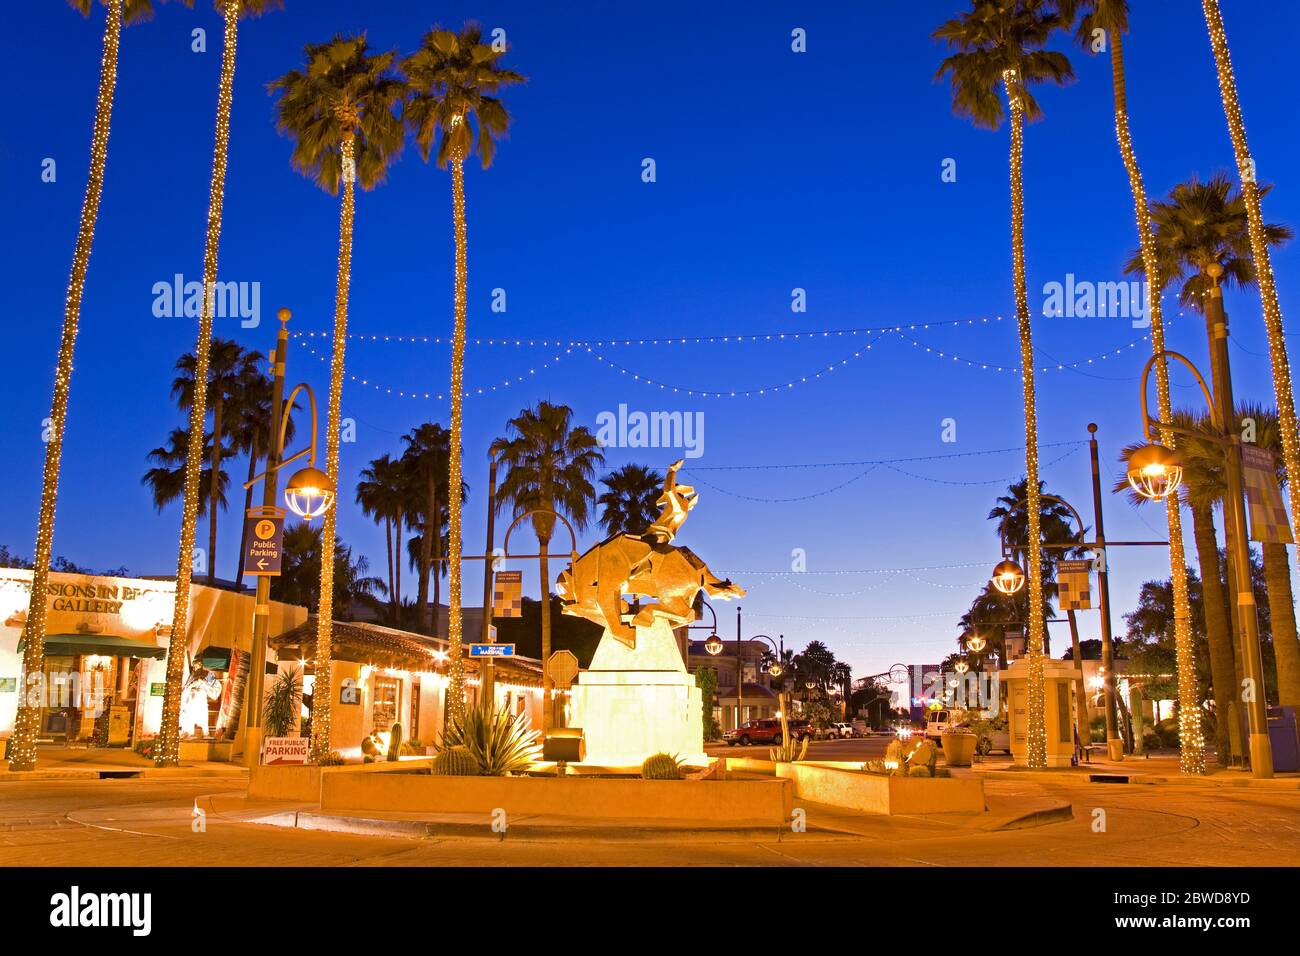 Jack Knife Sculpture by Ed Mell, Main Street, Arts District, Scottsdale, Phoenix, Arizona, USA Stock Photo